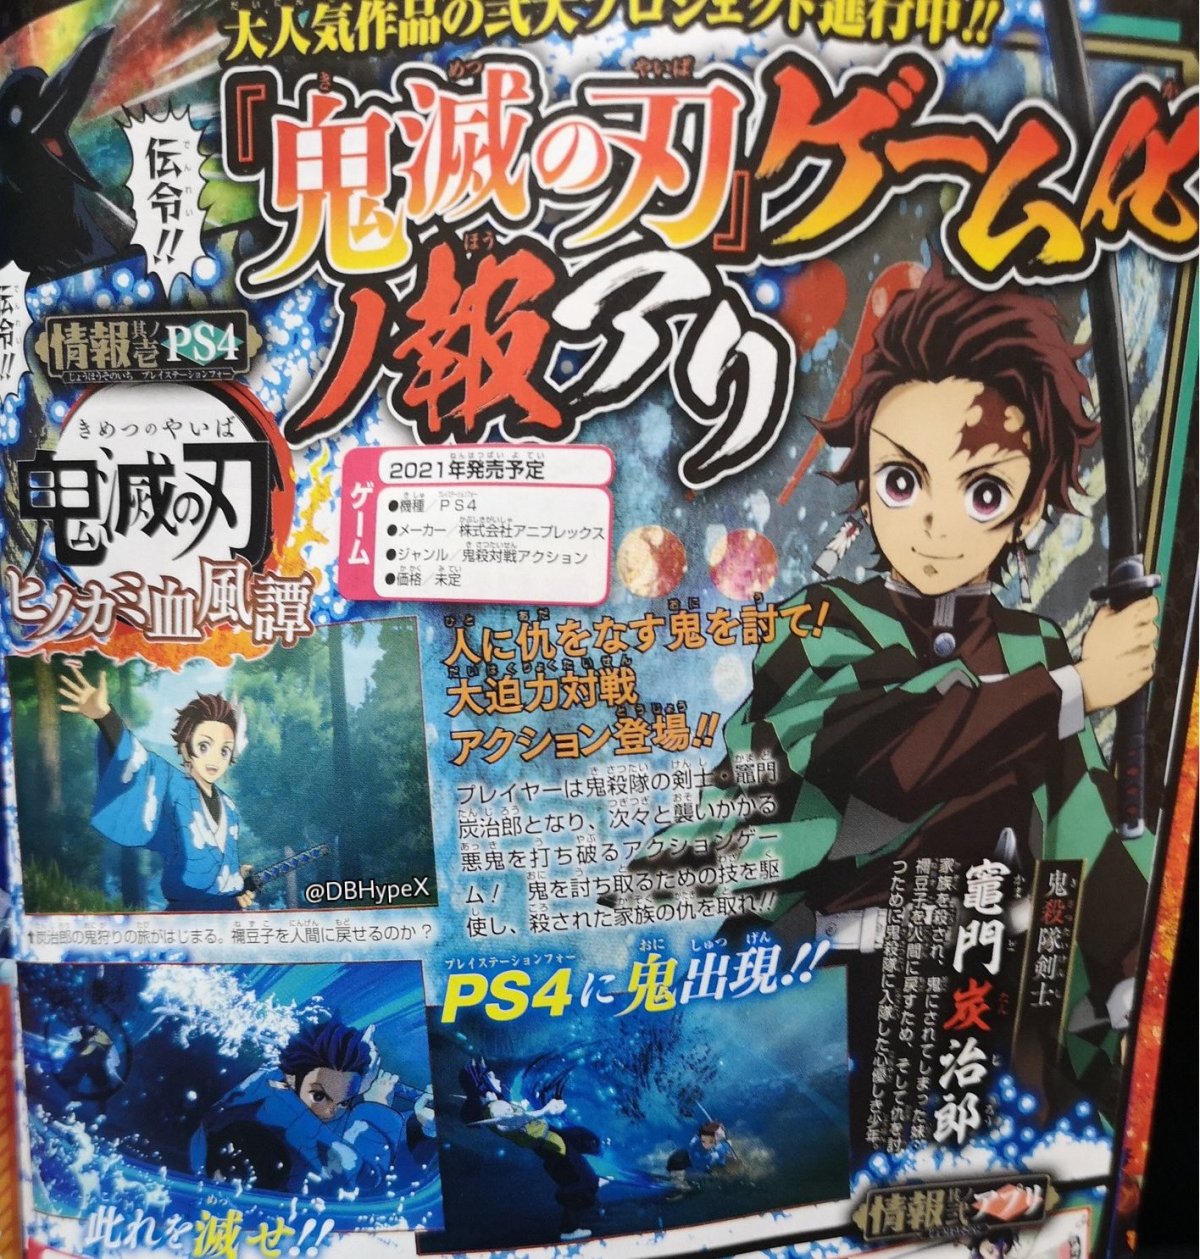 Demon Slayer: Kimetsu no Yaiba Manga Inspires PS4 and Smartphone Video  Games - Crunchyroll News